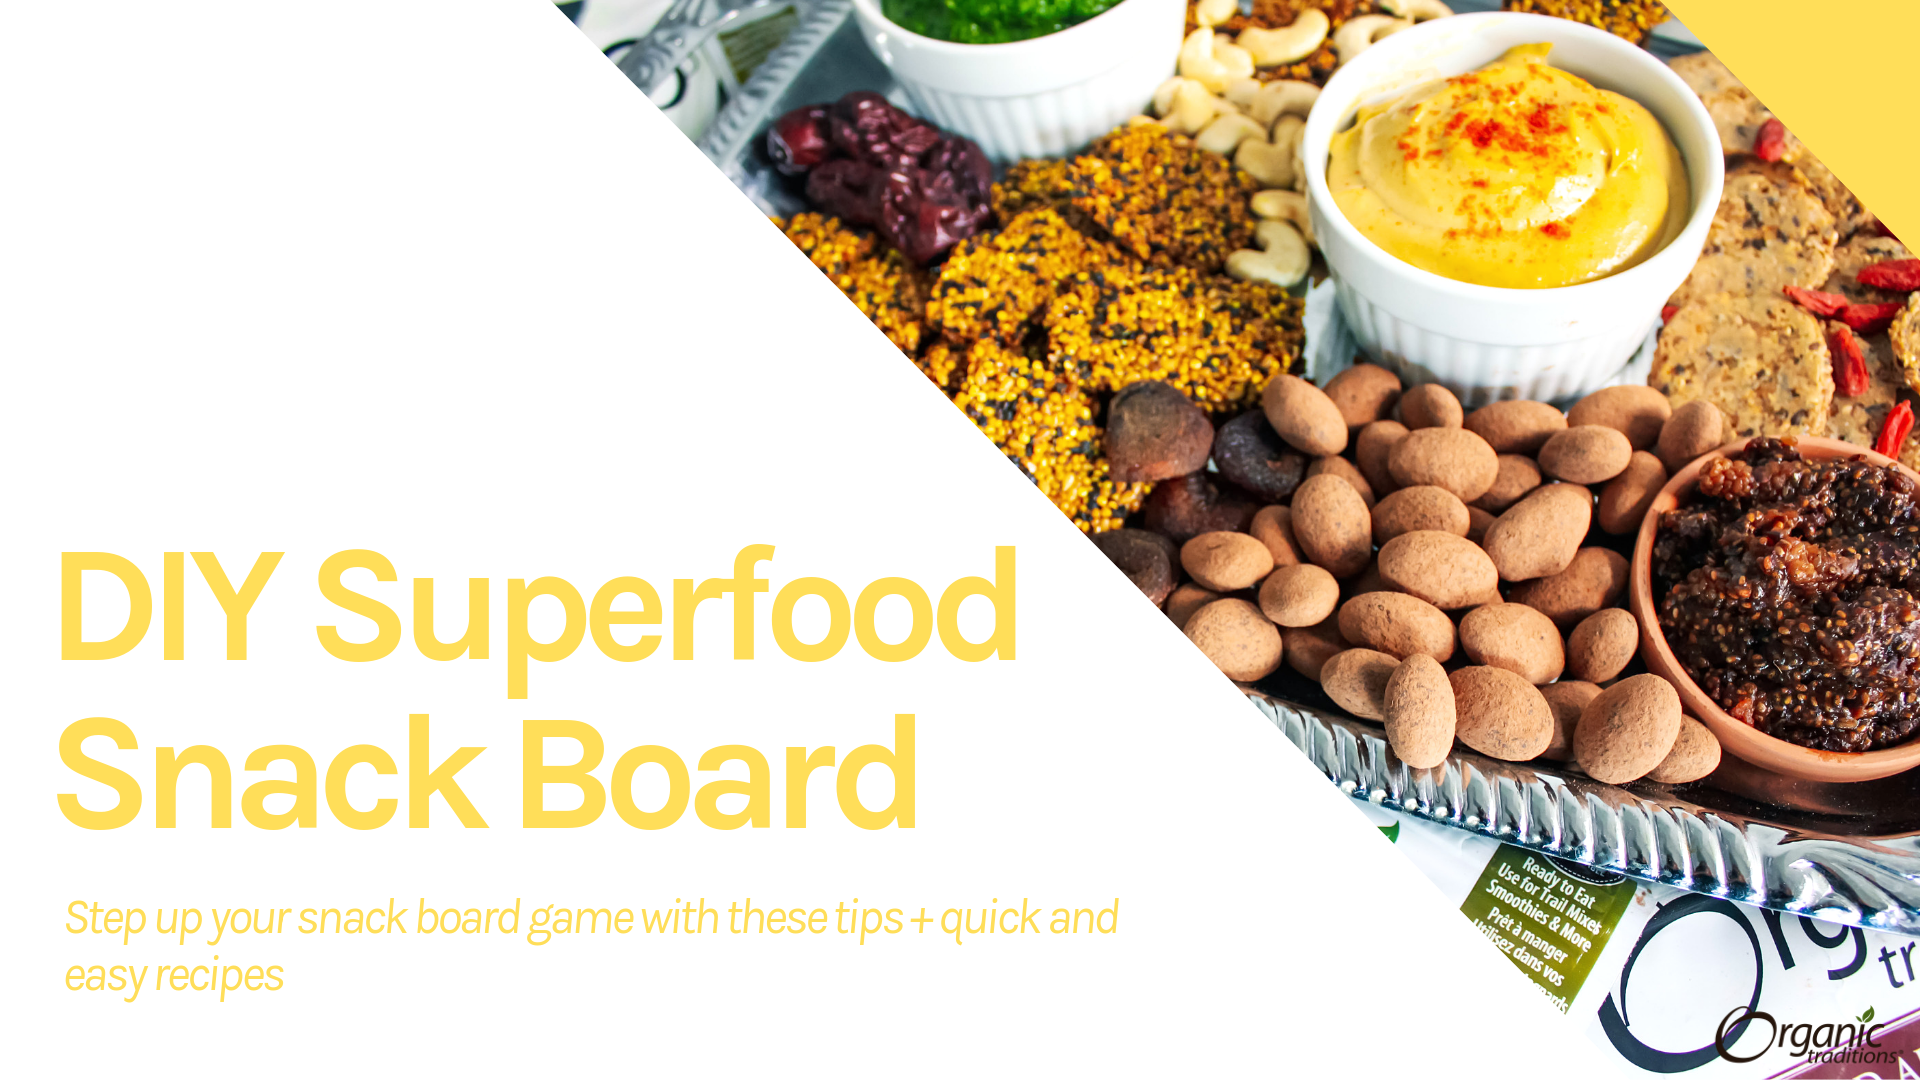 DIY Superfood Snack Board